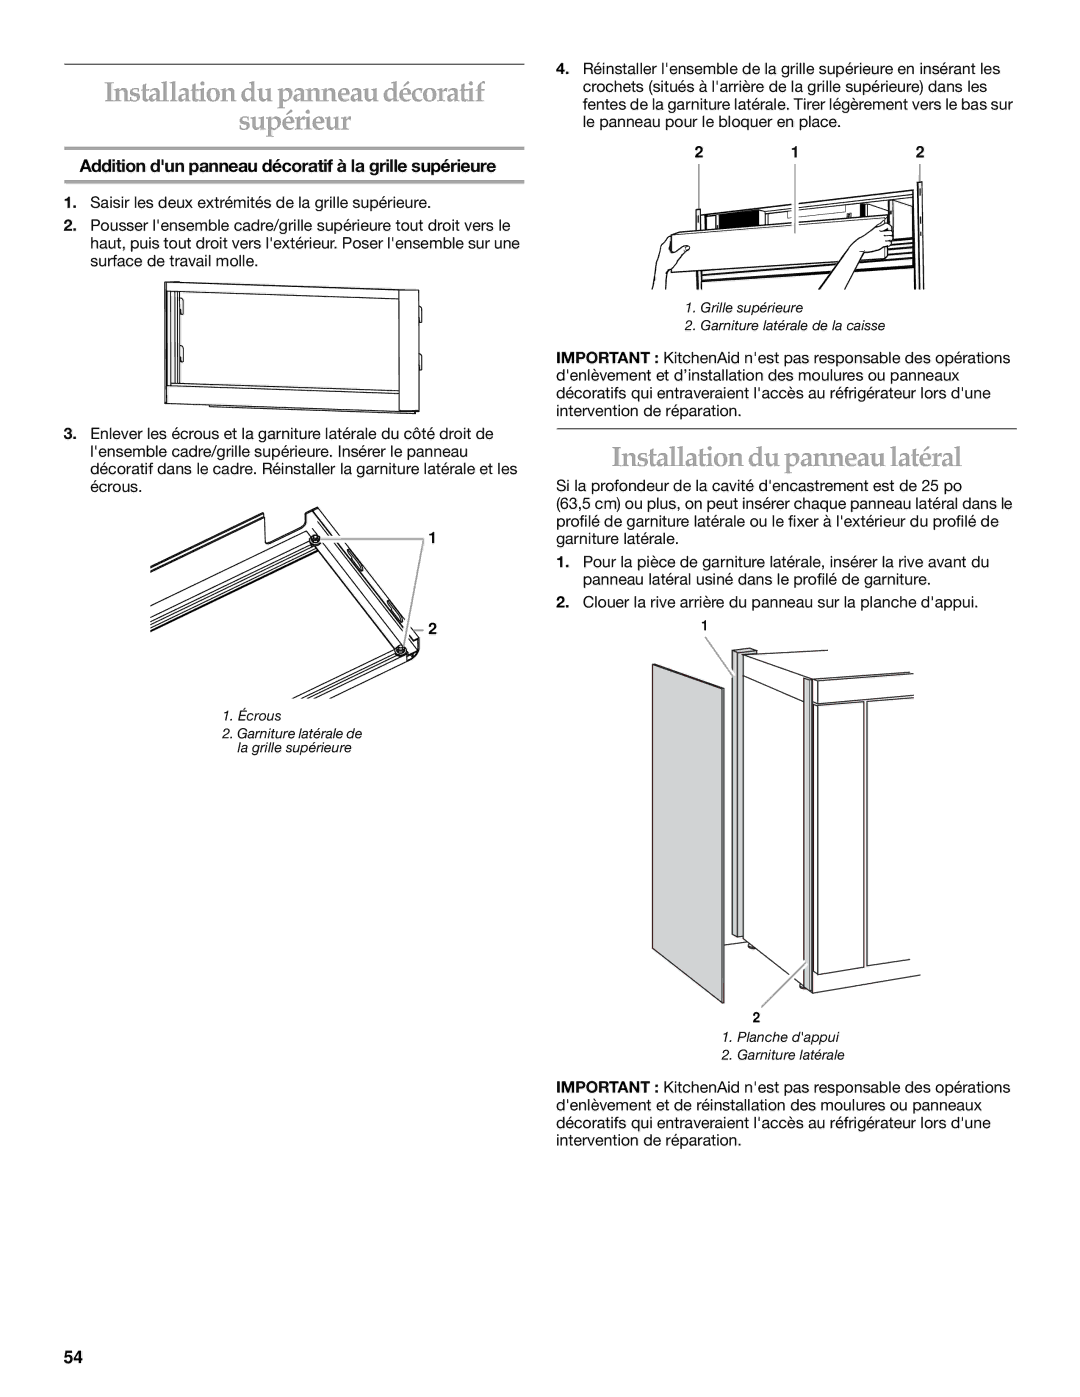 KitchenAid 2266877 manual Installation du panneau décoratif Supérieur, Installation du panneau latéral 